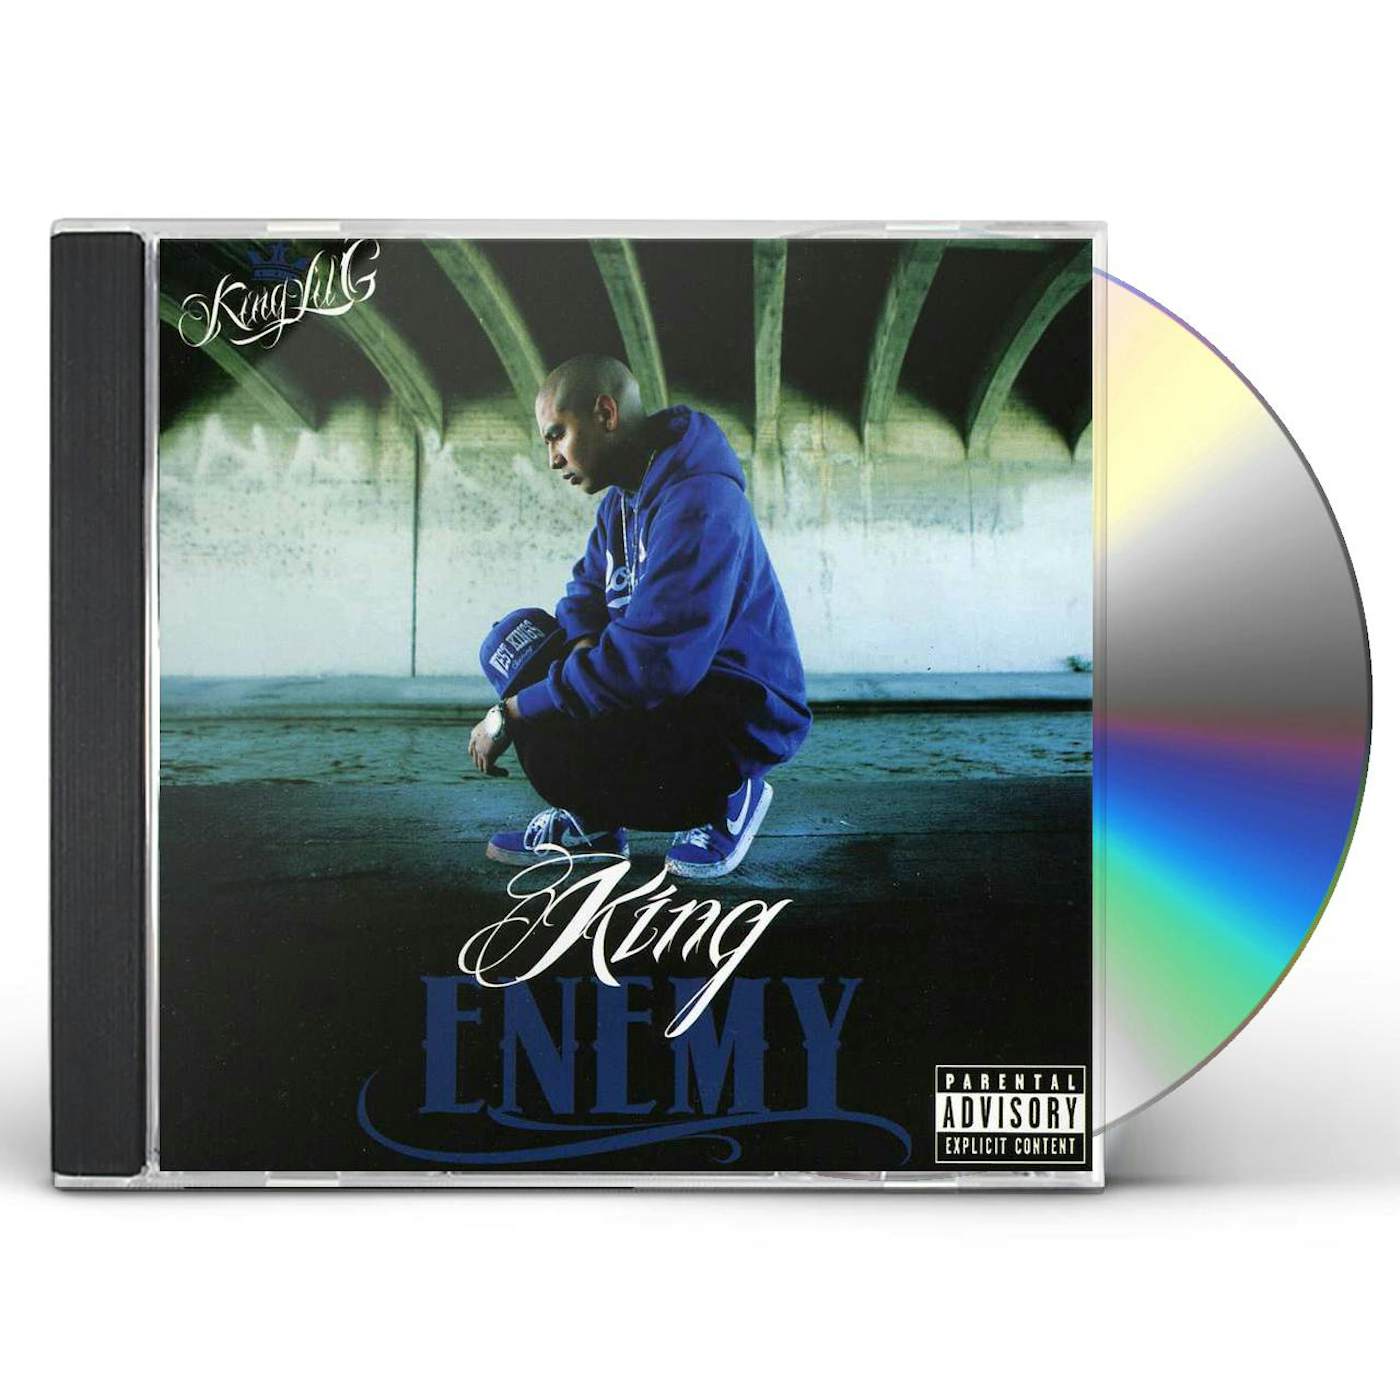 King Lil G KING ENEMY CD